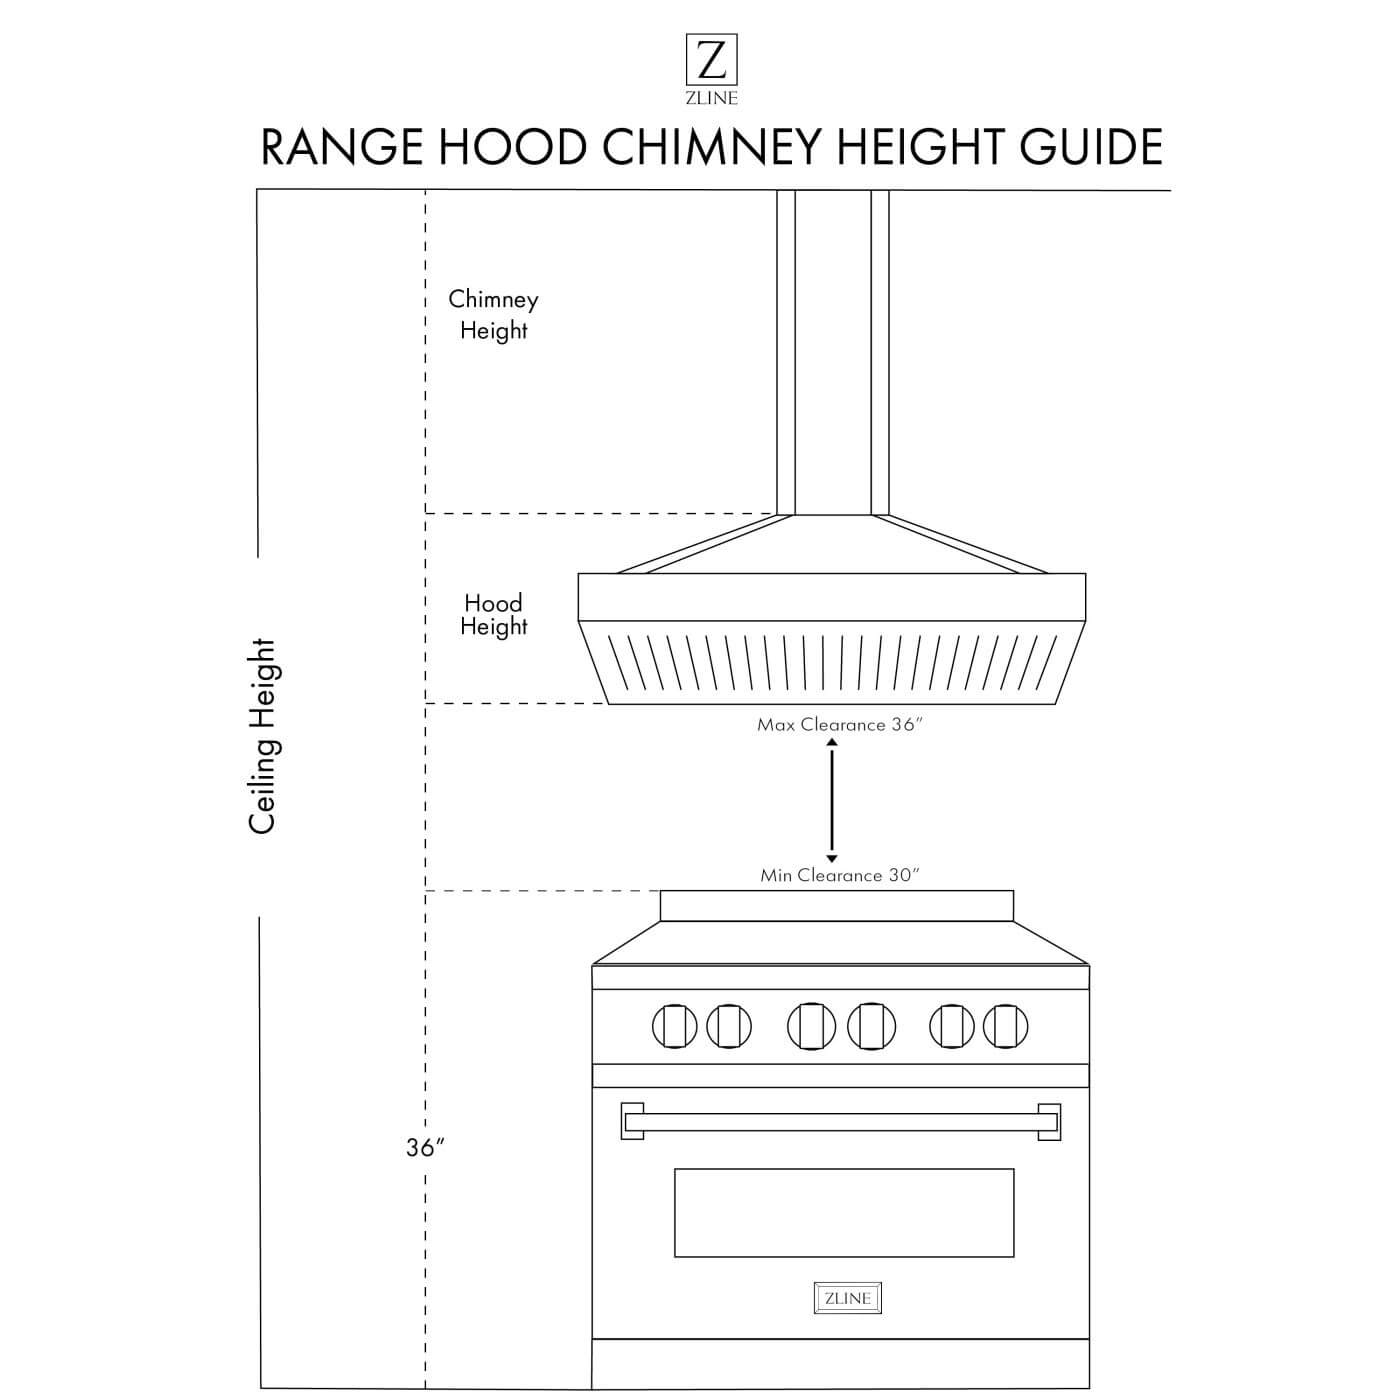 Range Hood Chimney Height Guide